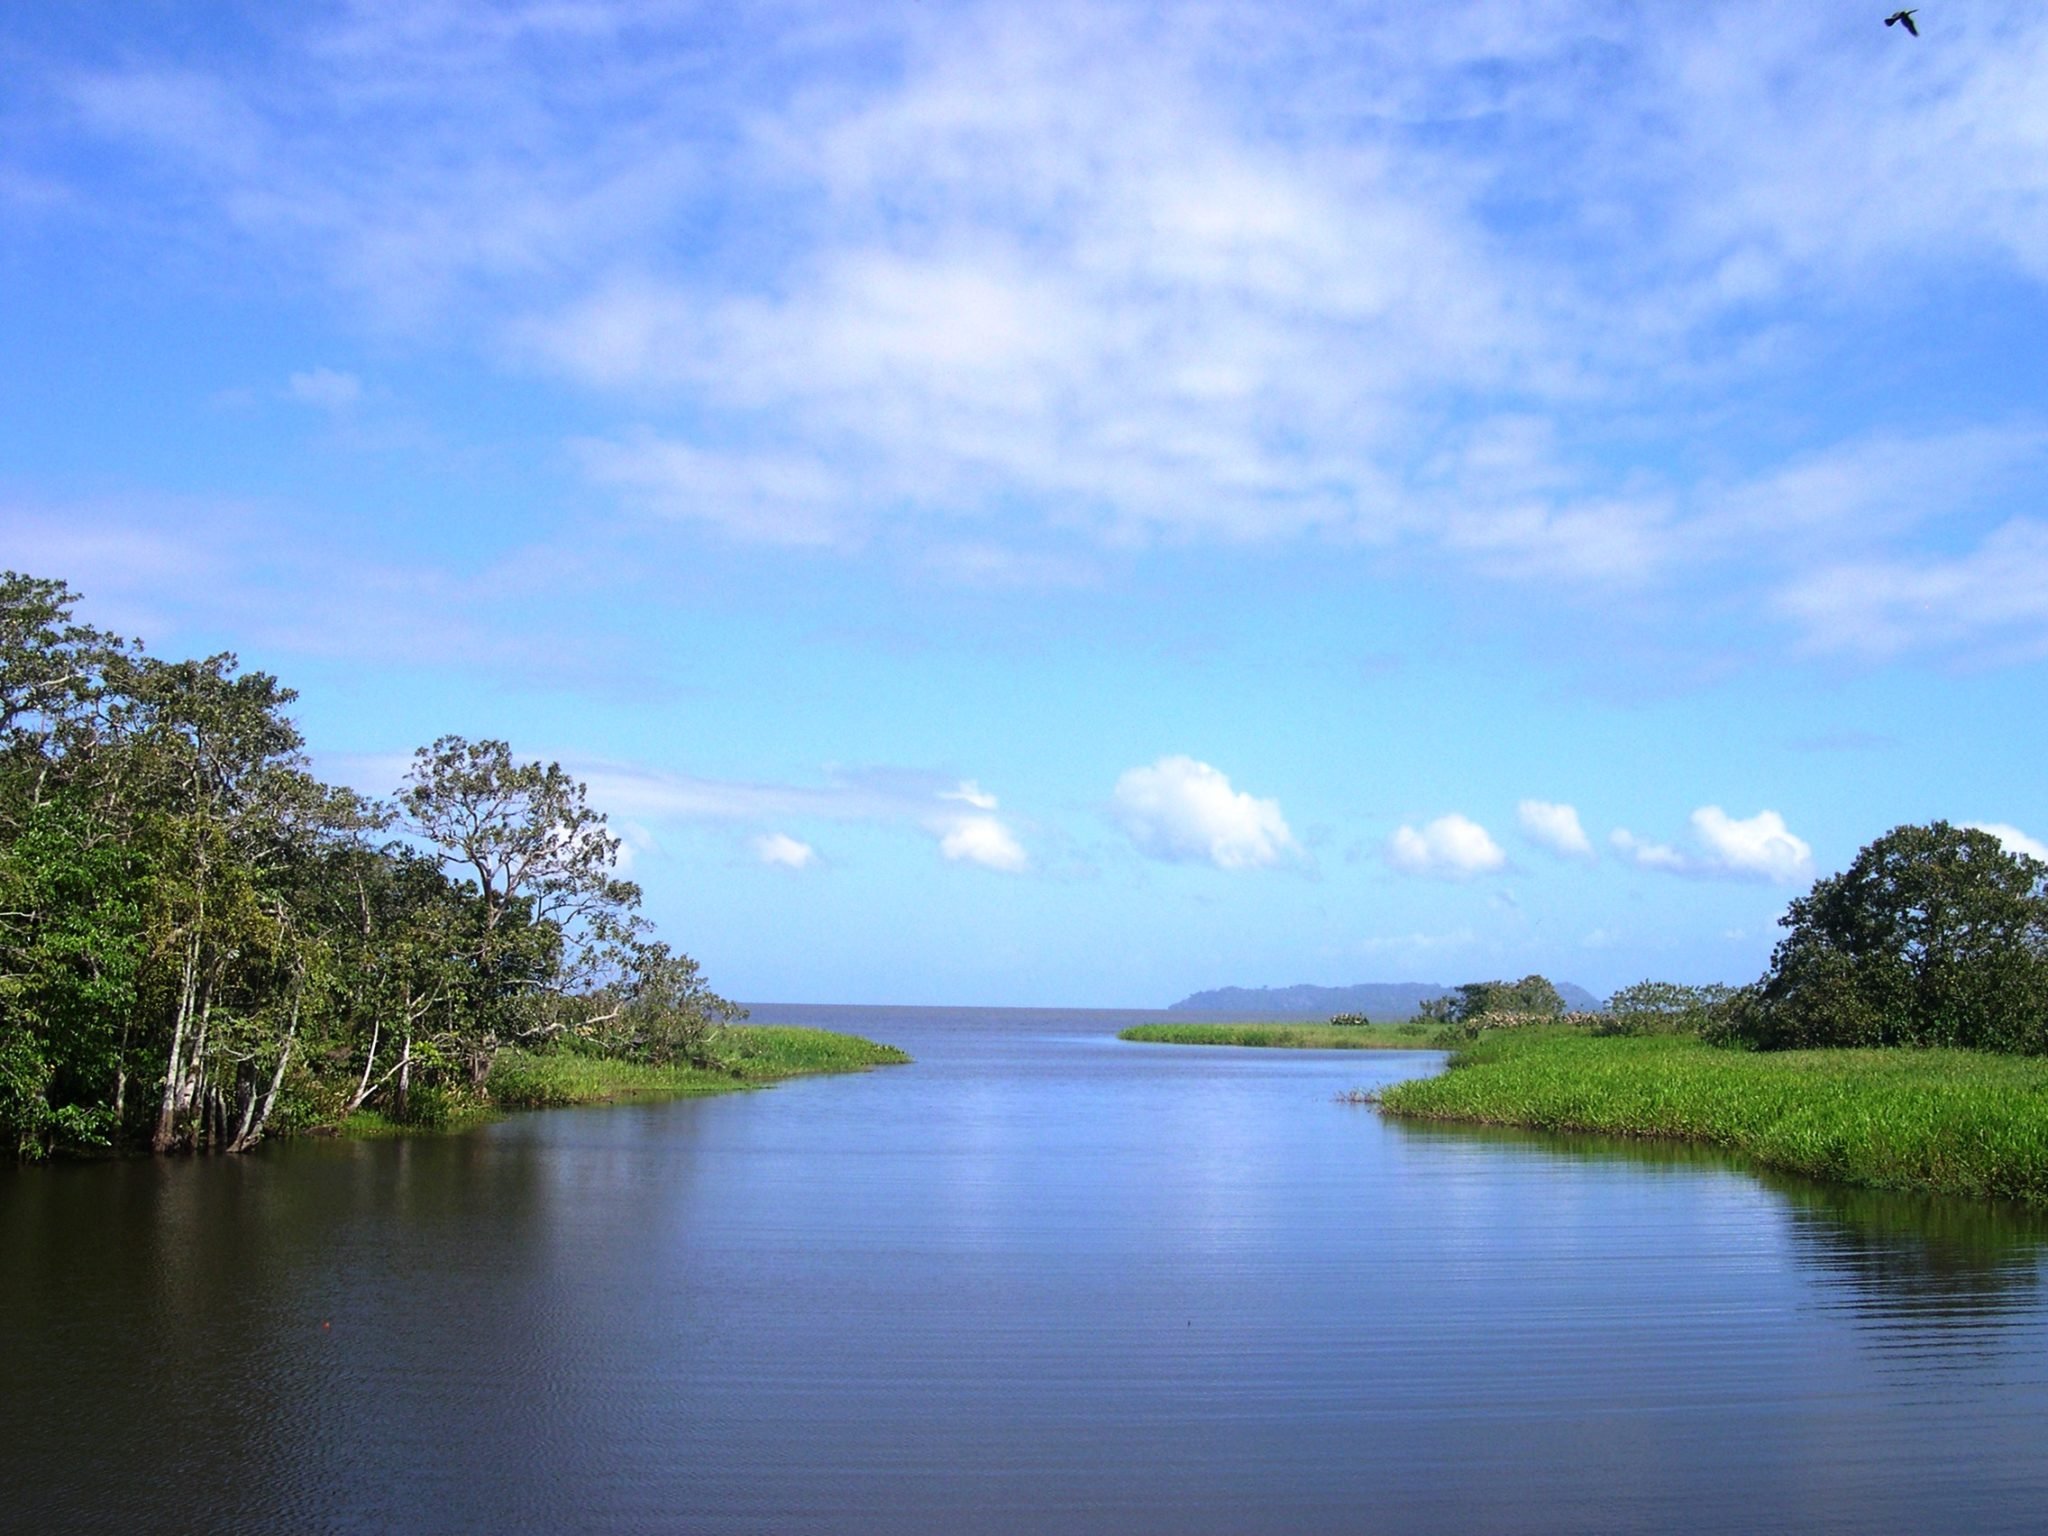 <p>Lake of Nicaragua (image: <a href="https://www.flickr.com/photos/nataskola/2960112329/in/photolist-5vzmgt-4FopTs-9qQgcy-6XsWjV-iHSTuW-iHTZKb-9E3b4g-6915Lr-a5A5wJ-Rgi3p-RgiLn-68PXKC-6sRBZN-mjNuDC-rrQSh3-8yb1fK-bpX245-4zN3Q5-rua5MK-6sMshH-rczQBq-raQMaX-aJopMa-rrQPZY-bv6LQ6-b6XRyg-7PBWVh-qNNQNi-ru9Jhr-ru8zBH-qNY7q2-ru4xGL-qxaae9-rczMSN-rrShy7-fysLYt-9ZkeXS-b71TJa-dfUdMw-6959jG-aBo5wq-5V3ECx-6qF2sP-26TbnjZ-ru4DSG-raPdmH-dkpusC-91aHbt-rcz2Q1-rcH7mD">natacha cortez</a>)</p>